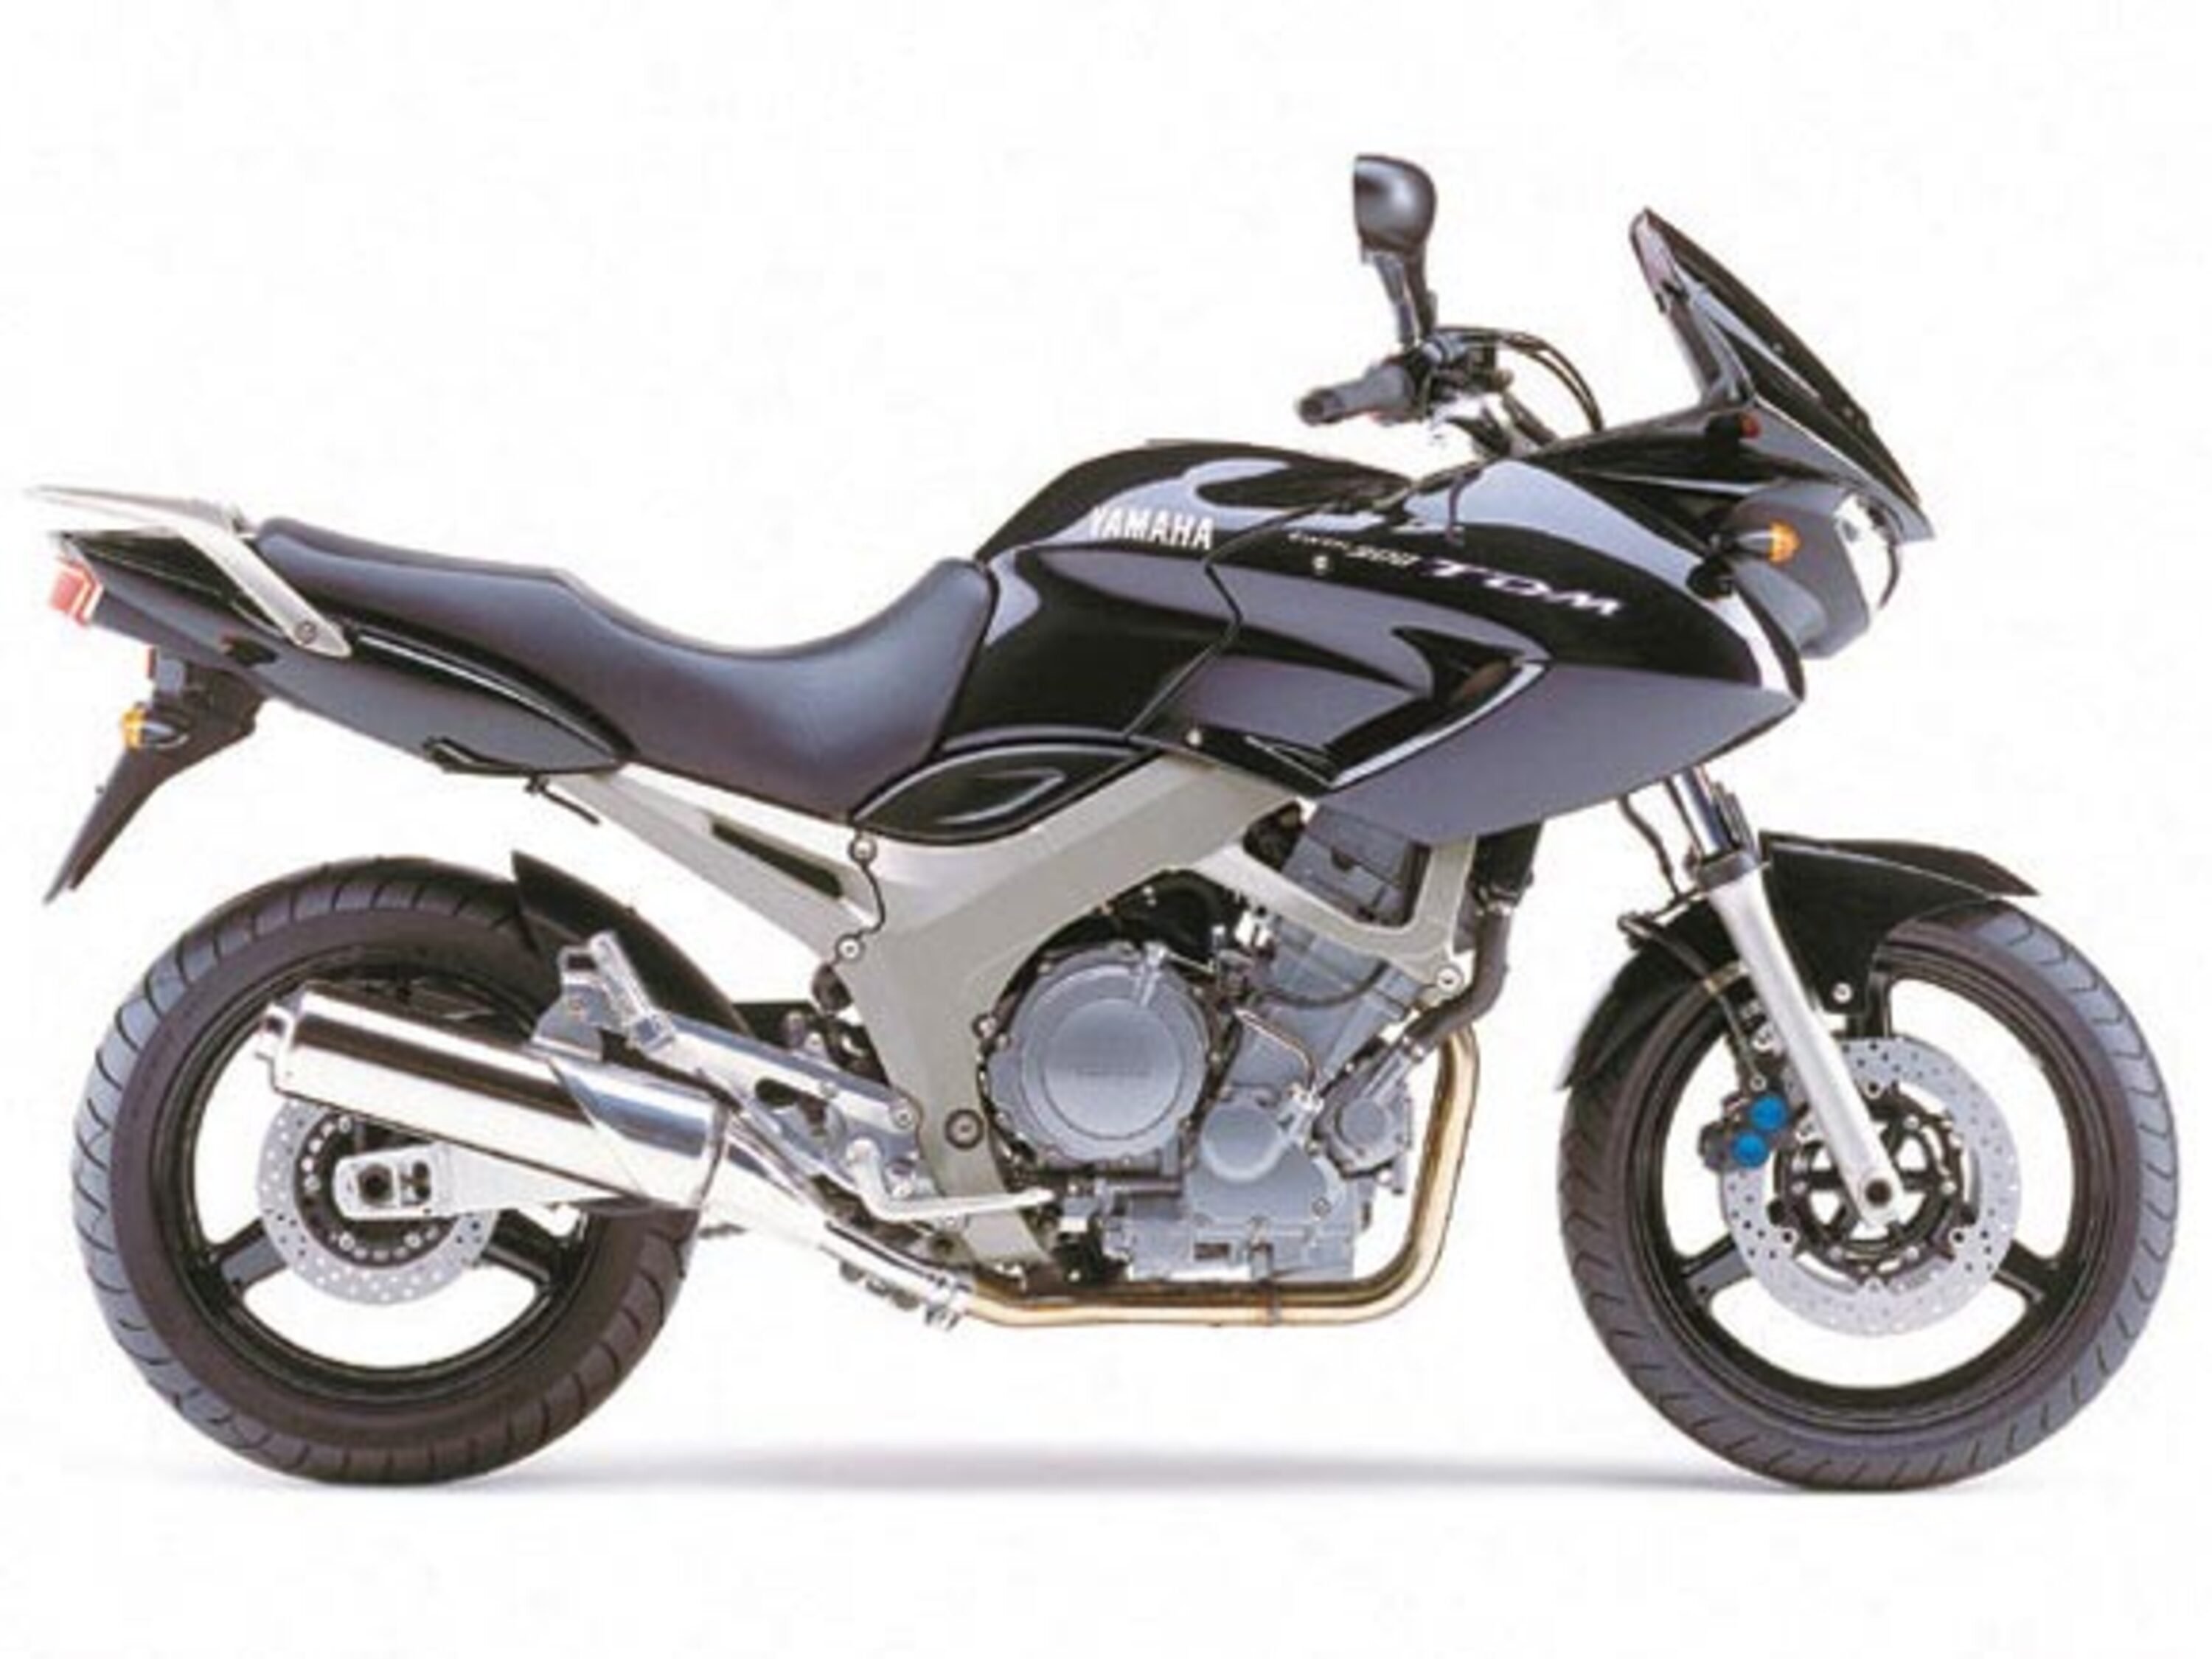 Yamaha TDM 900 (2002 - 14), prezzo e scheda tecnica - Moto.it